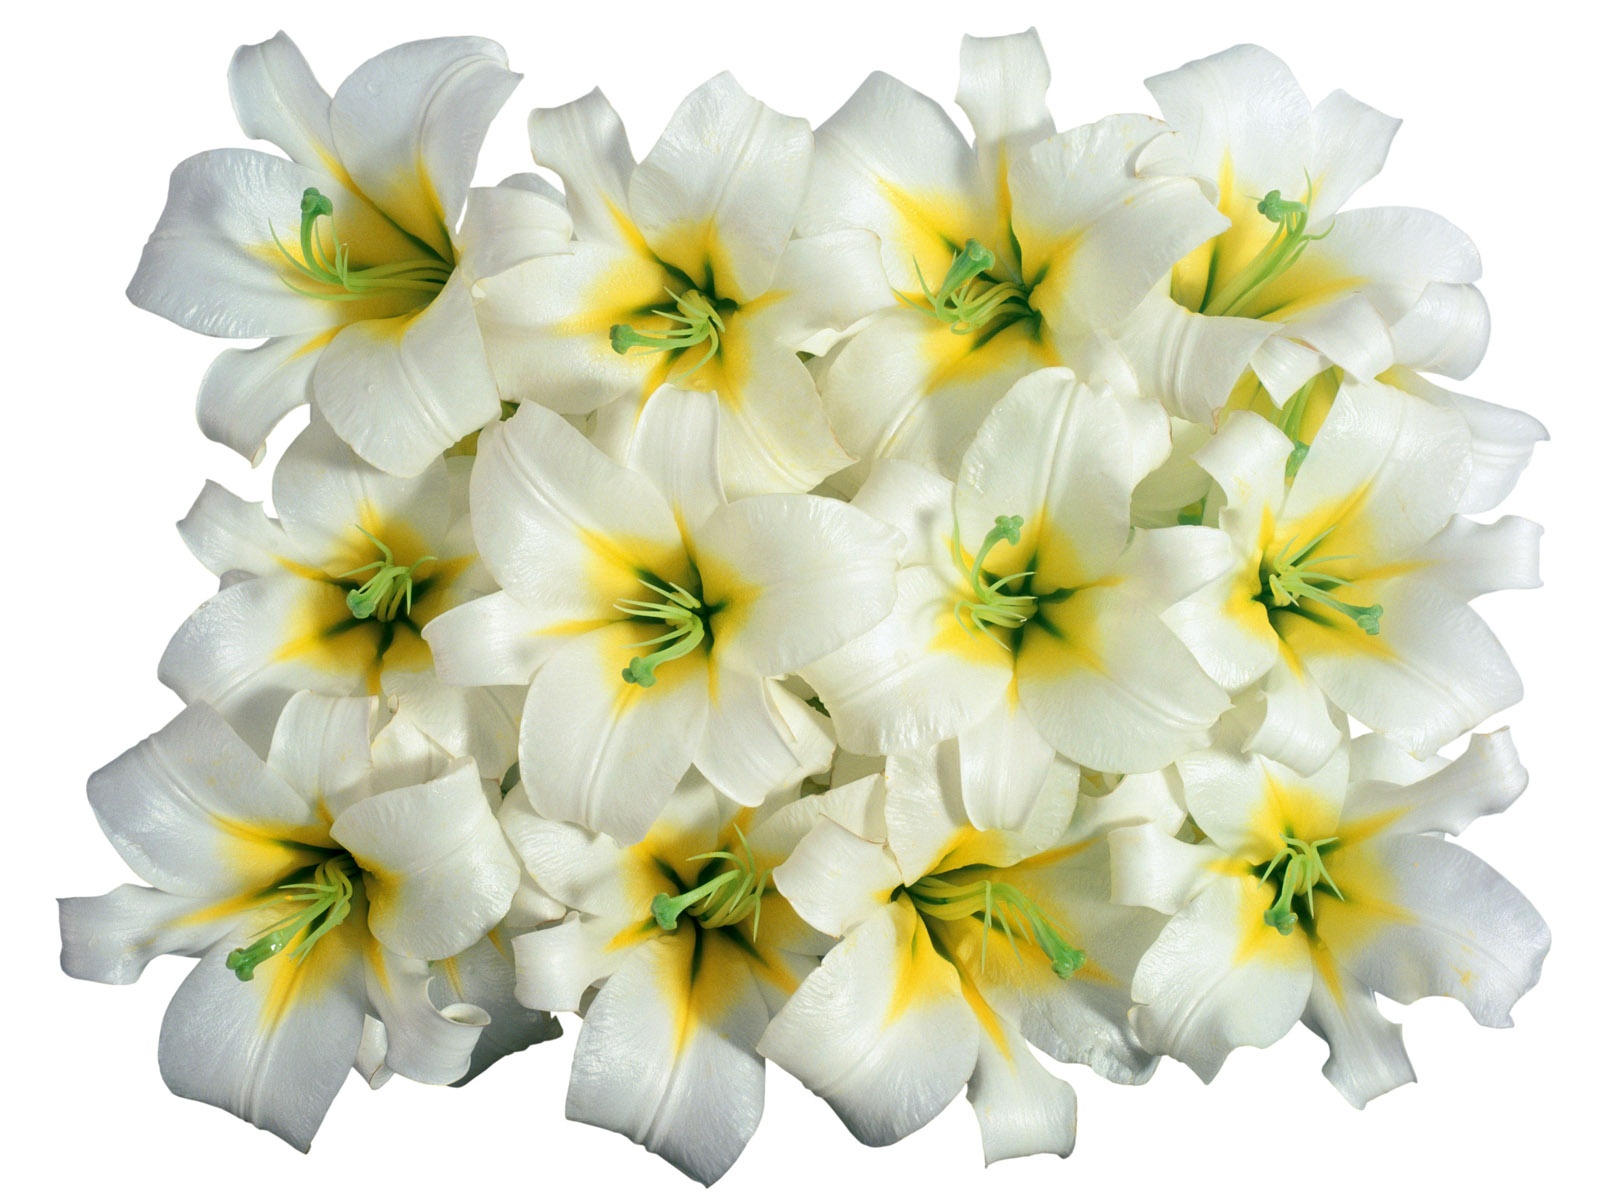 Snow-white flowers wallpaper #3 - 1600x1200